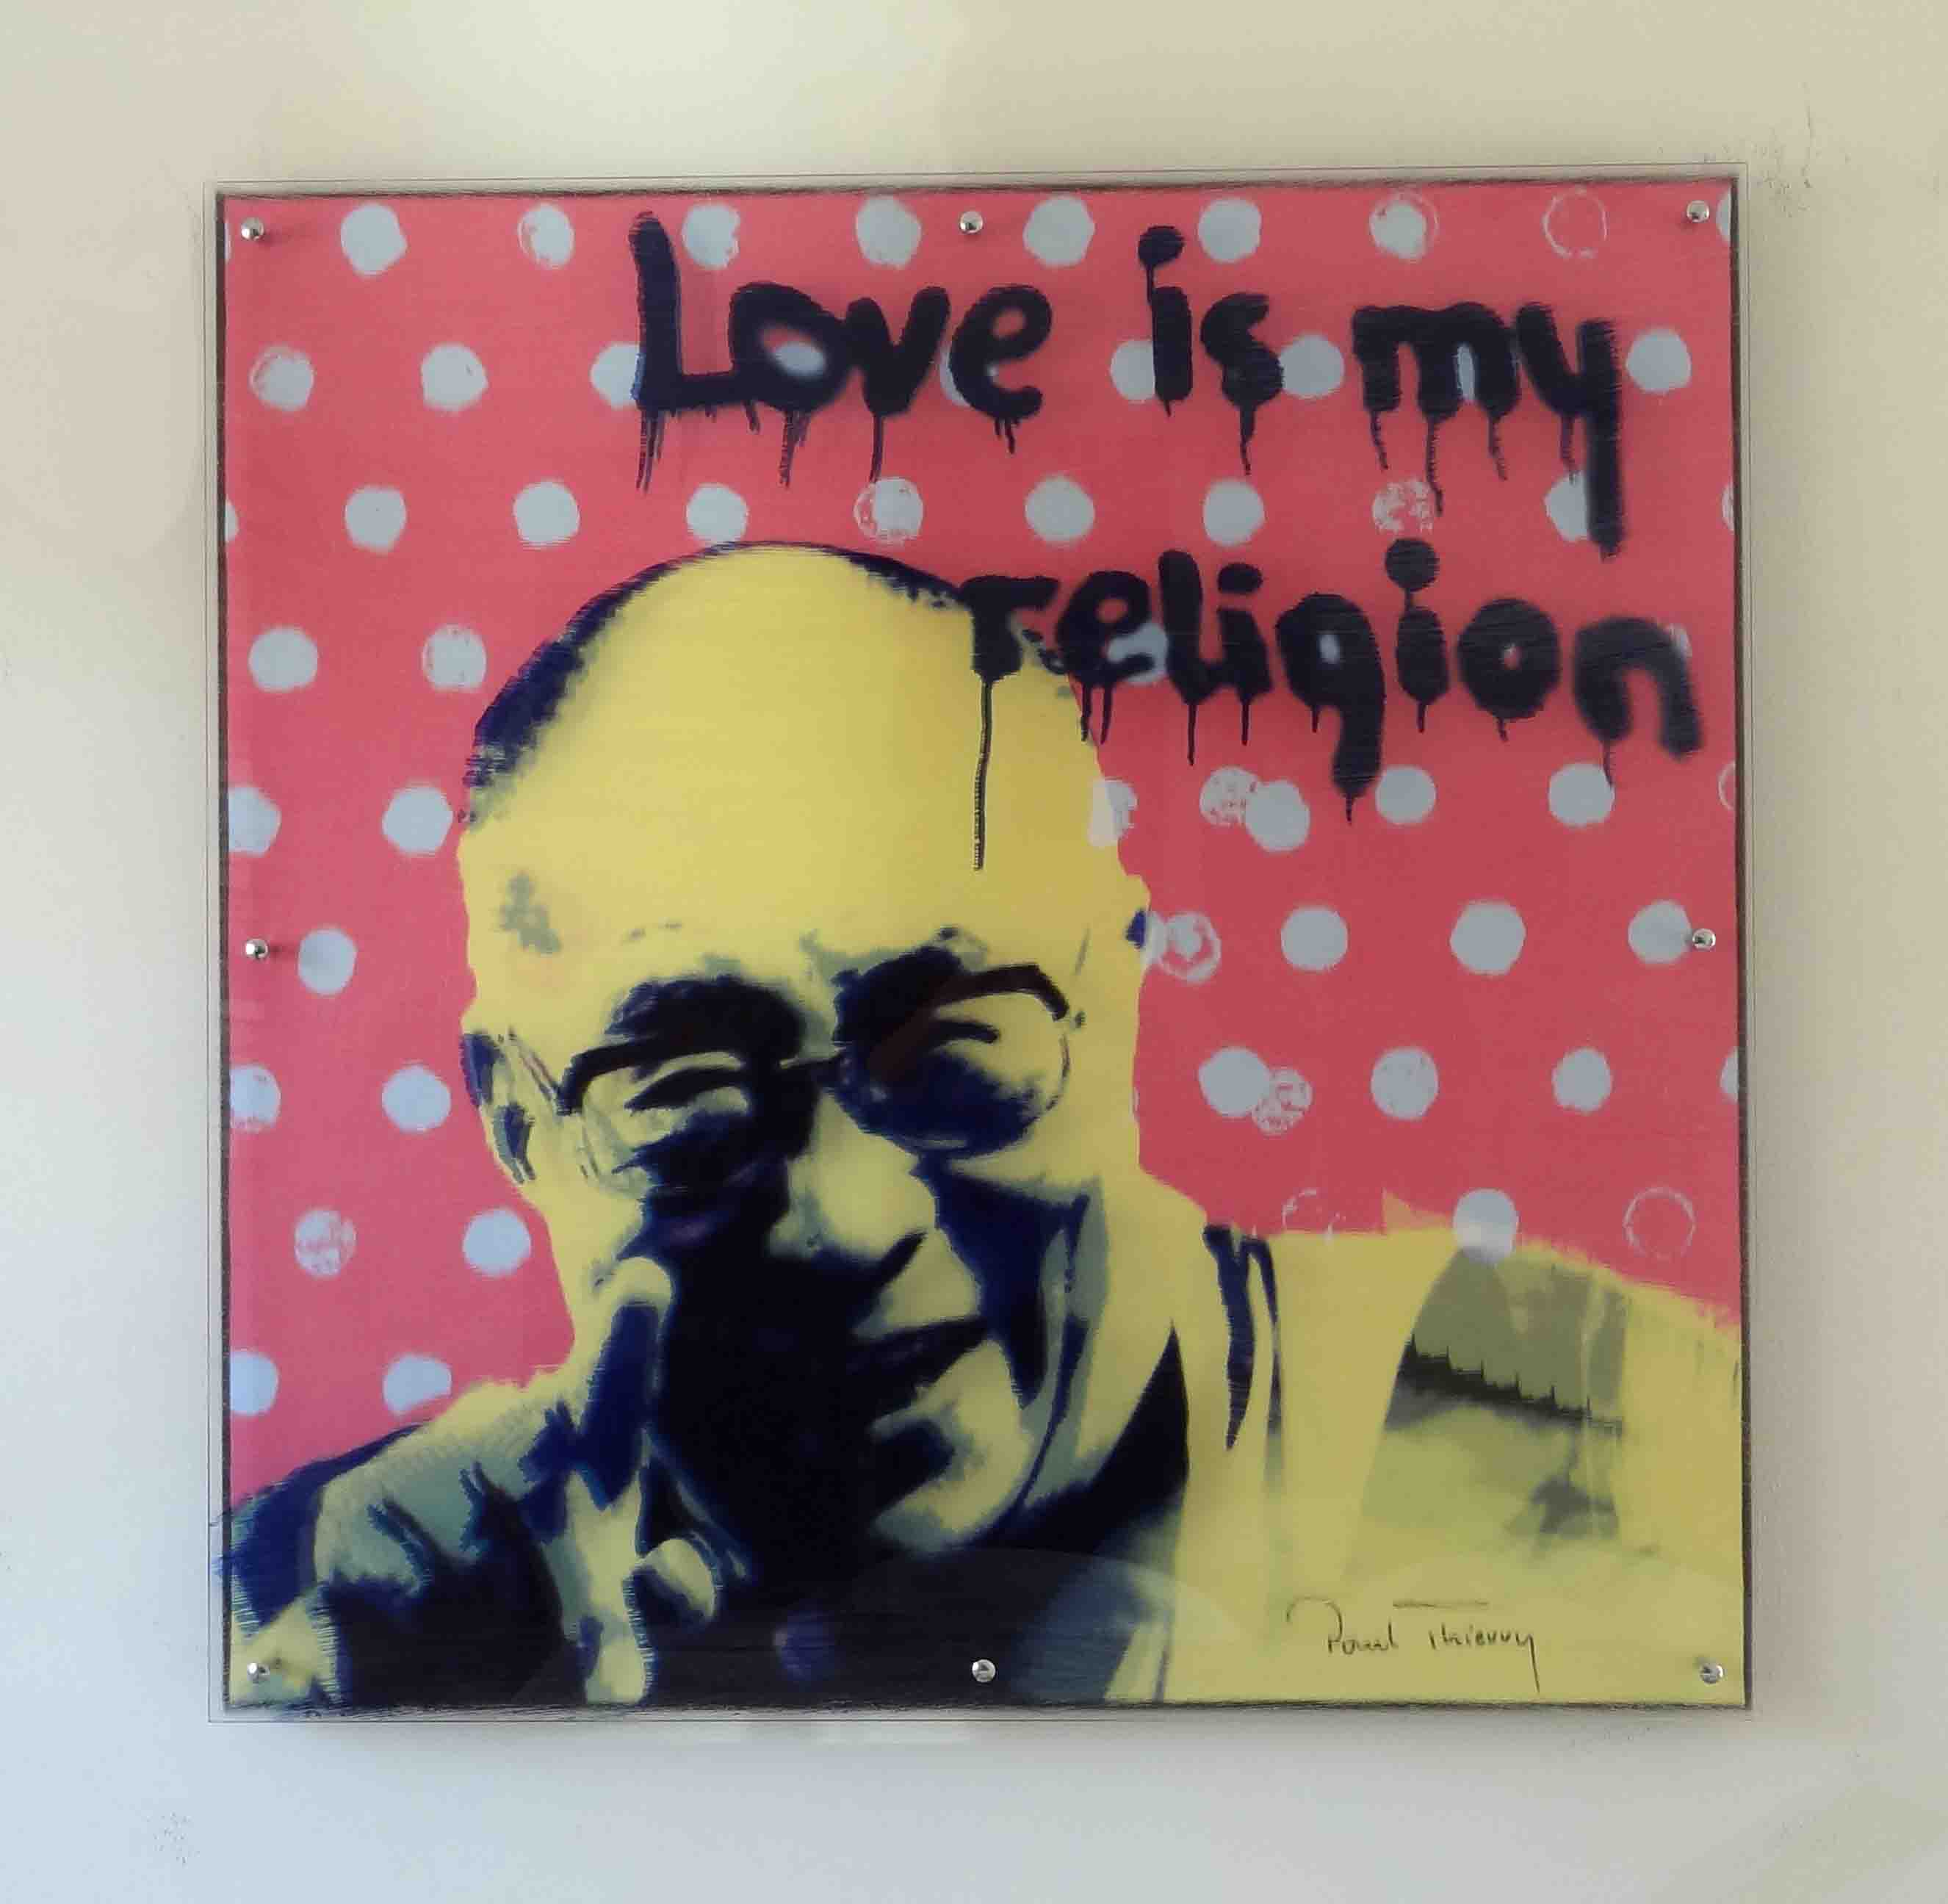 Dalai Lama - Love is my religion